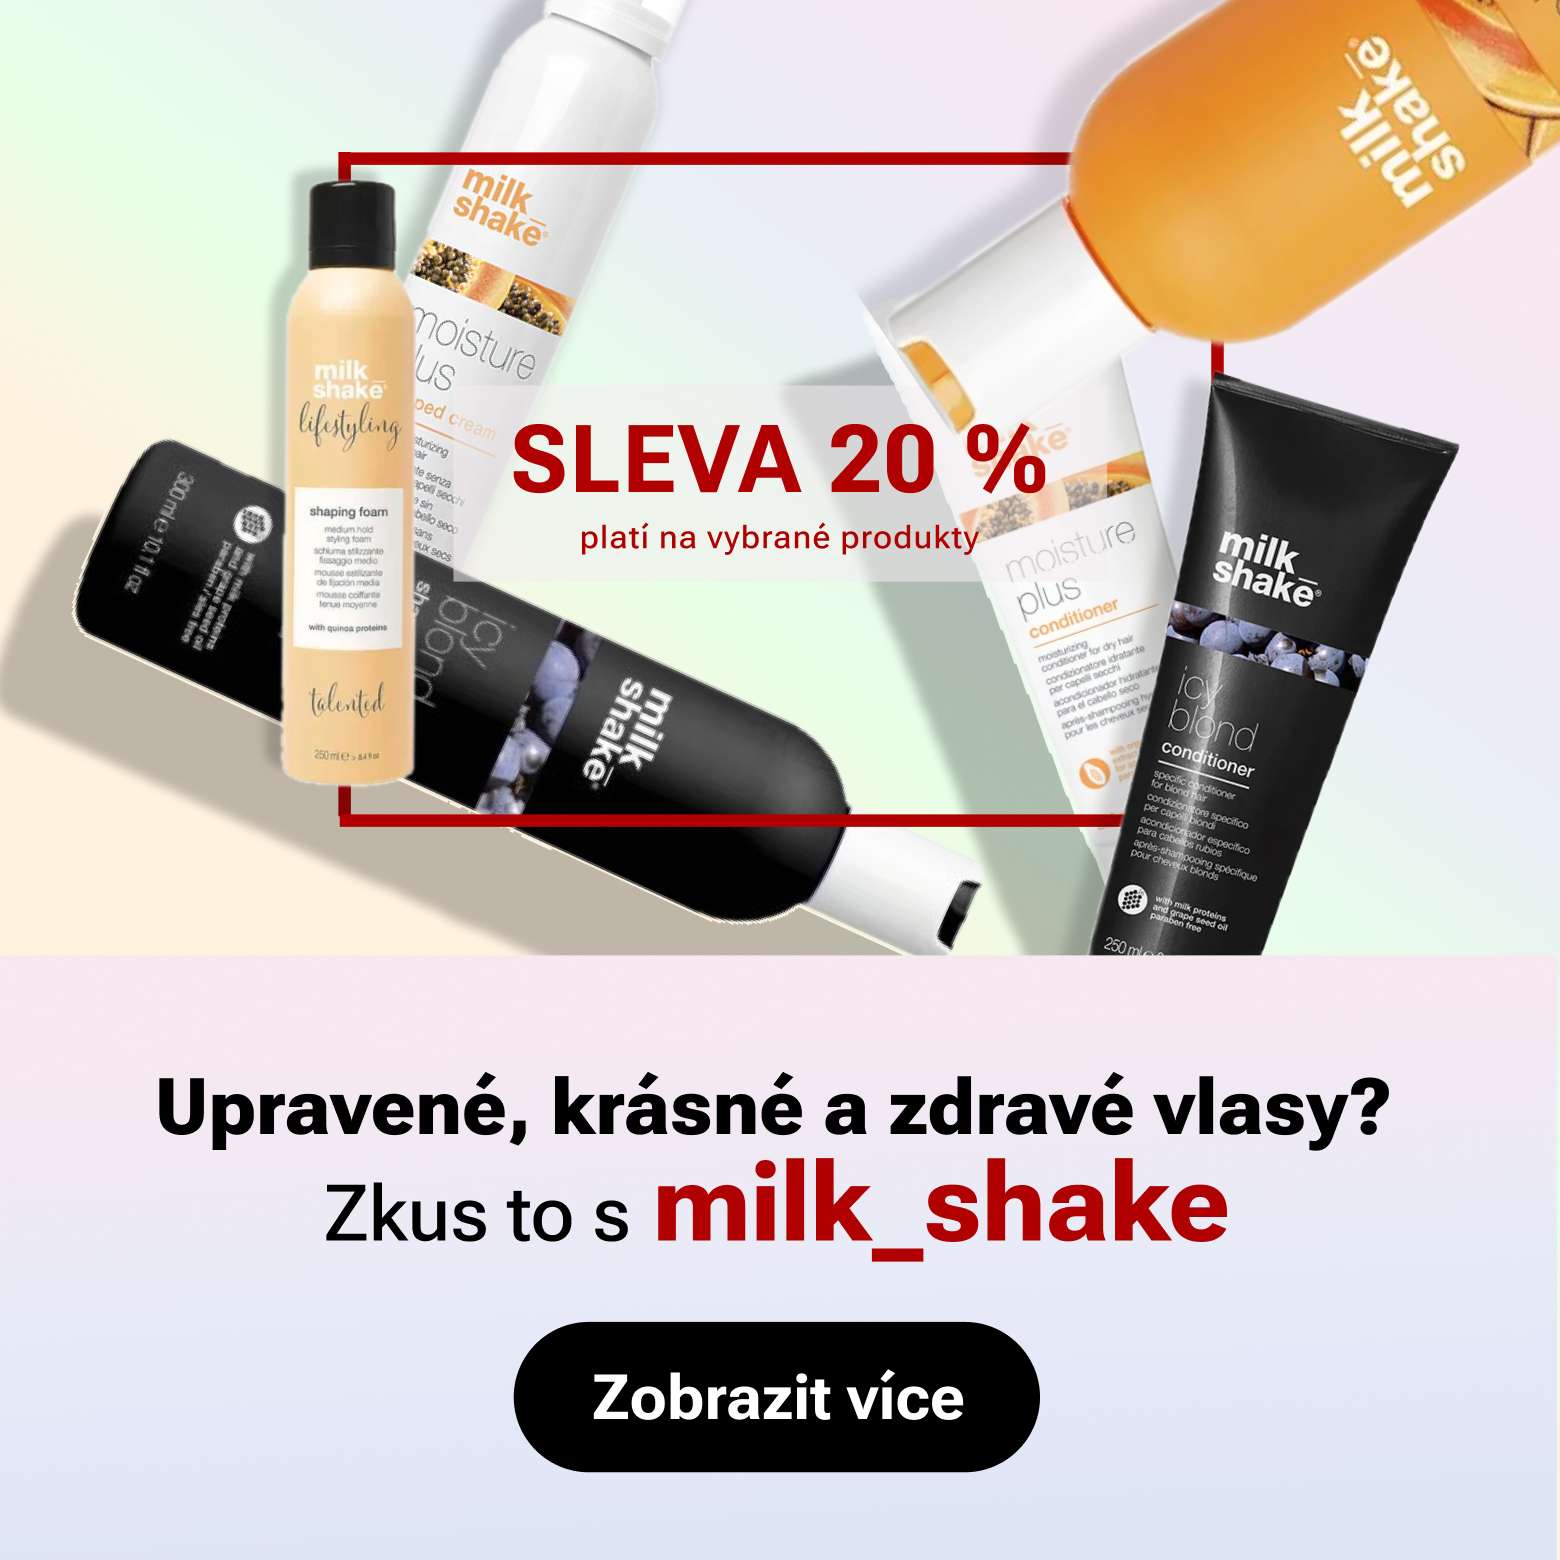 Milk Shake 20 pct. sleva vybrané produkty